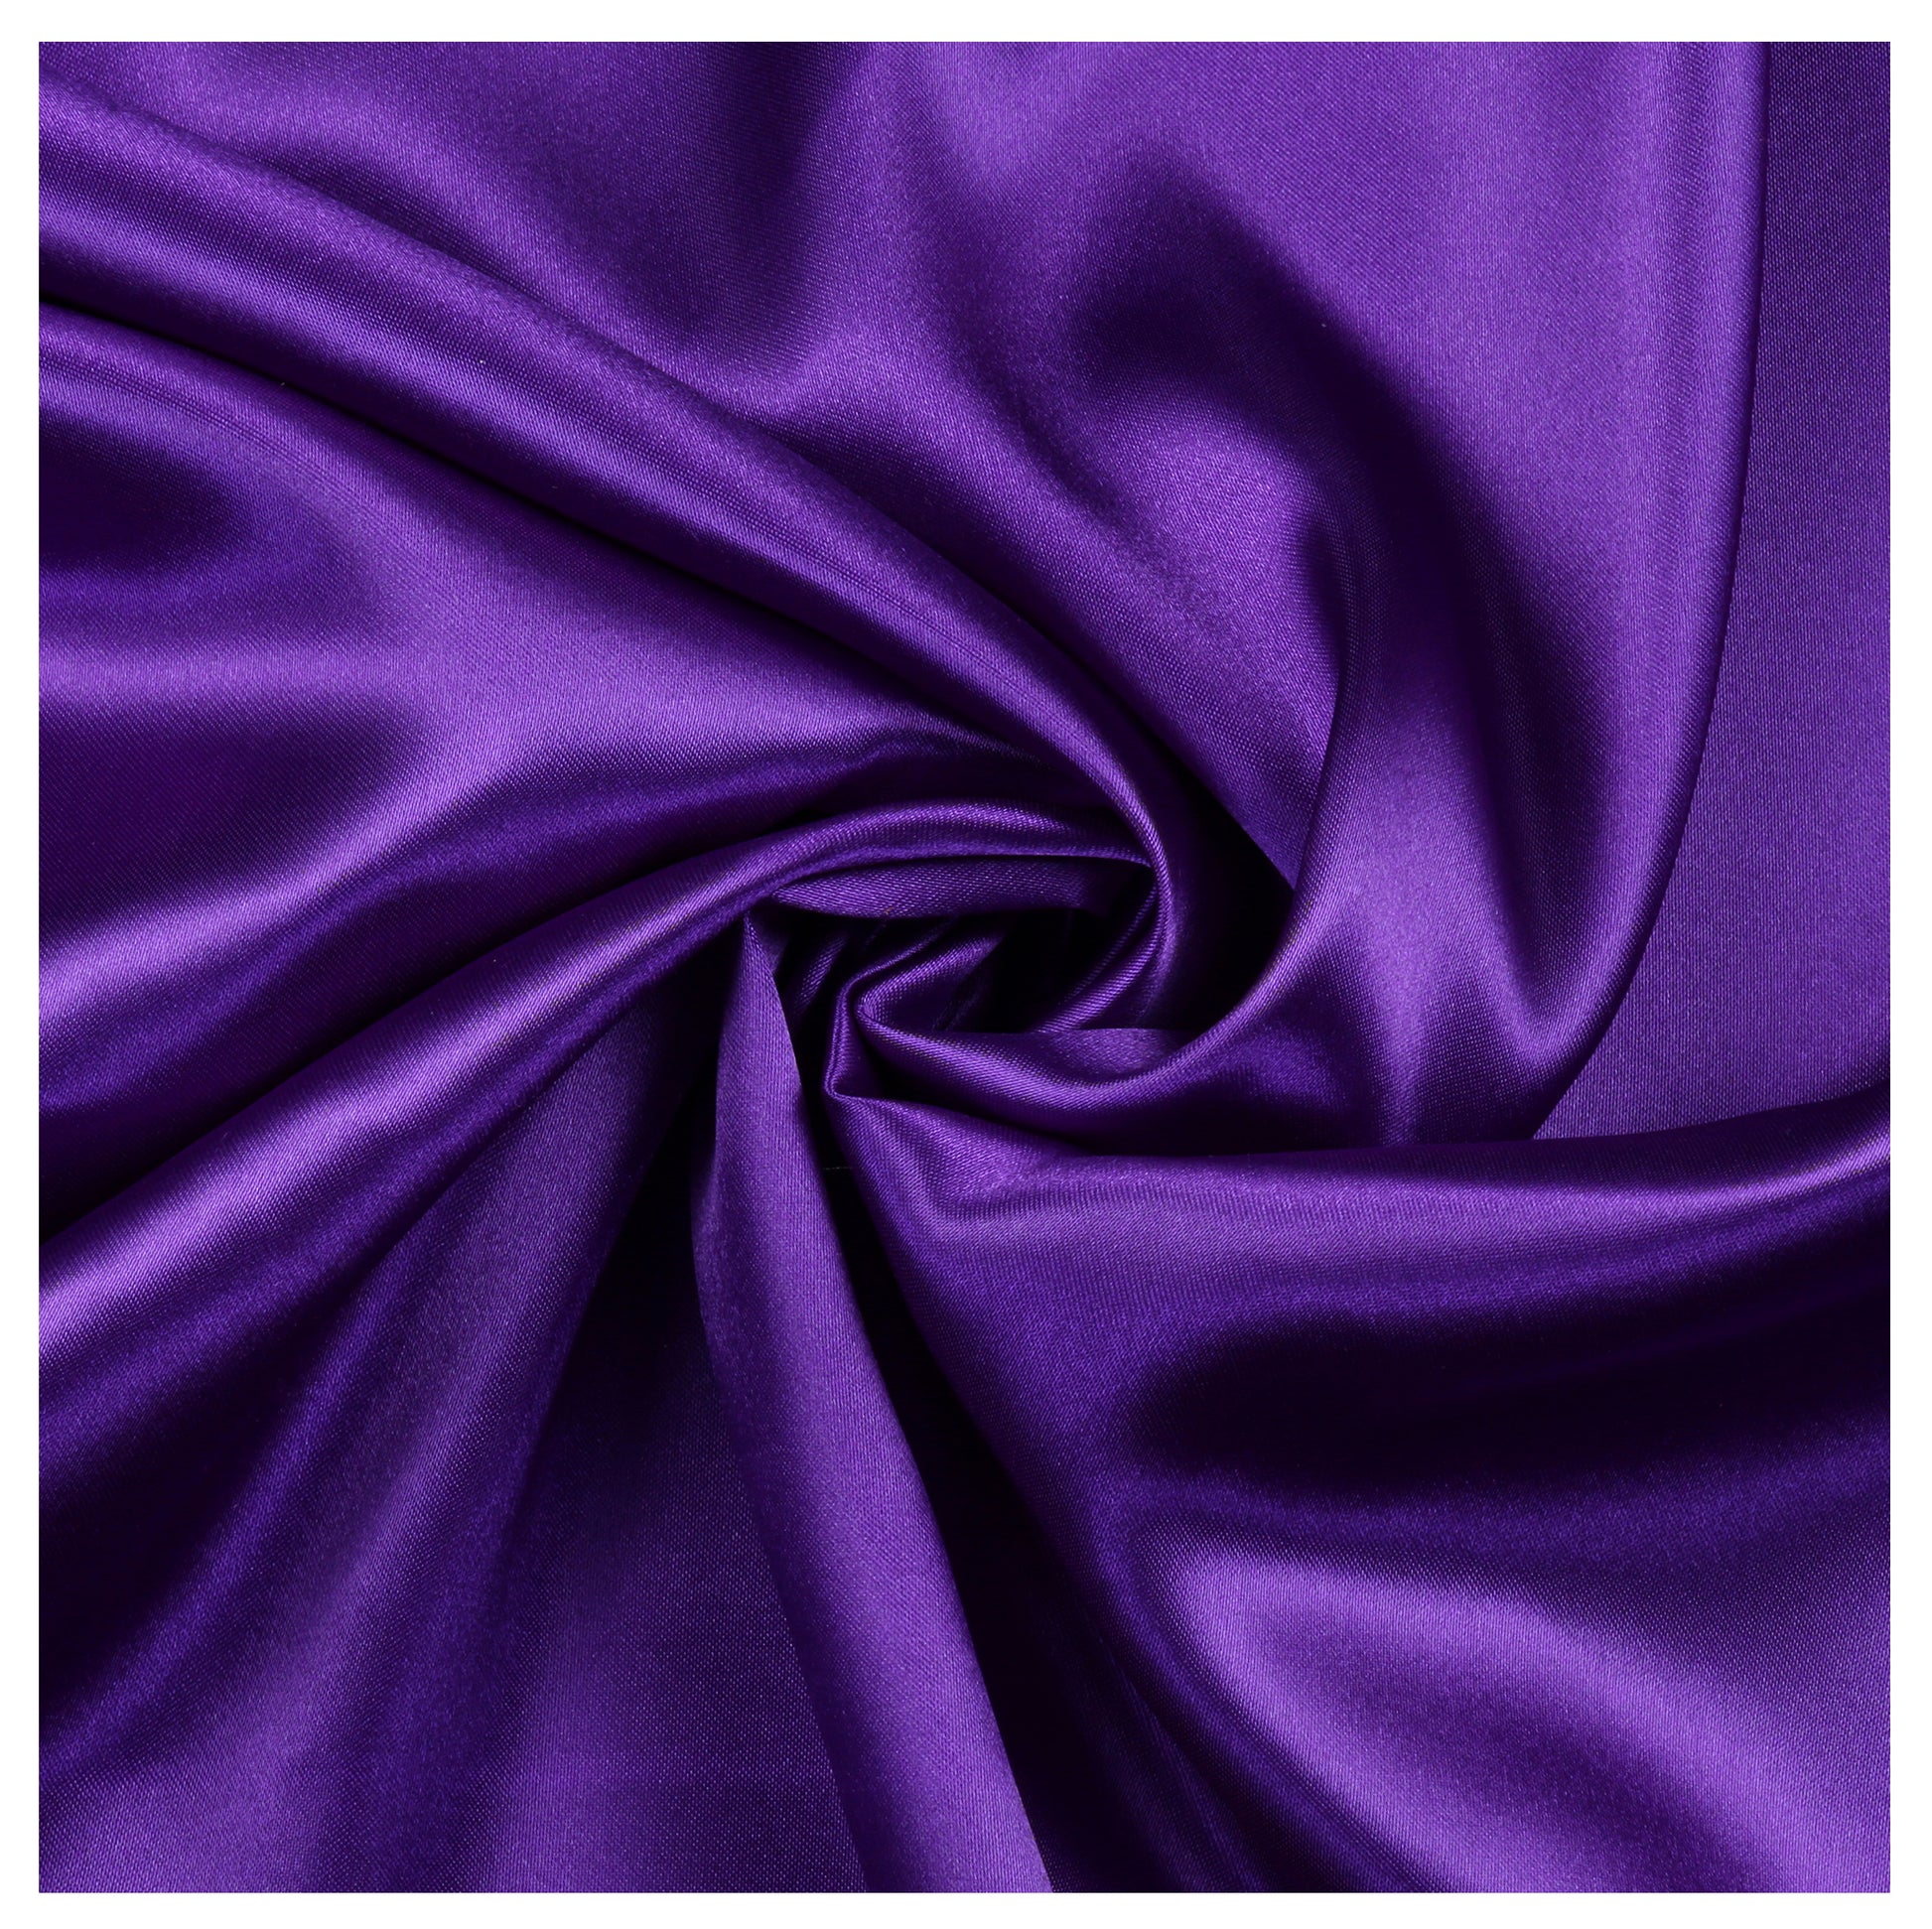 Cadbury Purple,8c621ea9-7b33-4905-bb84-095d4a3c1713